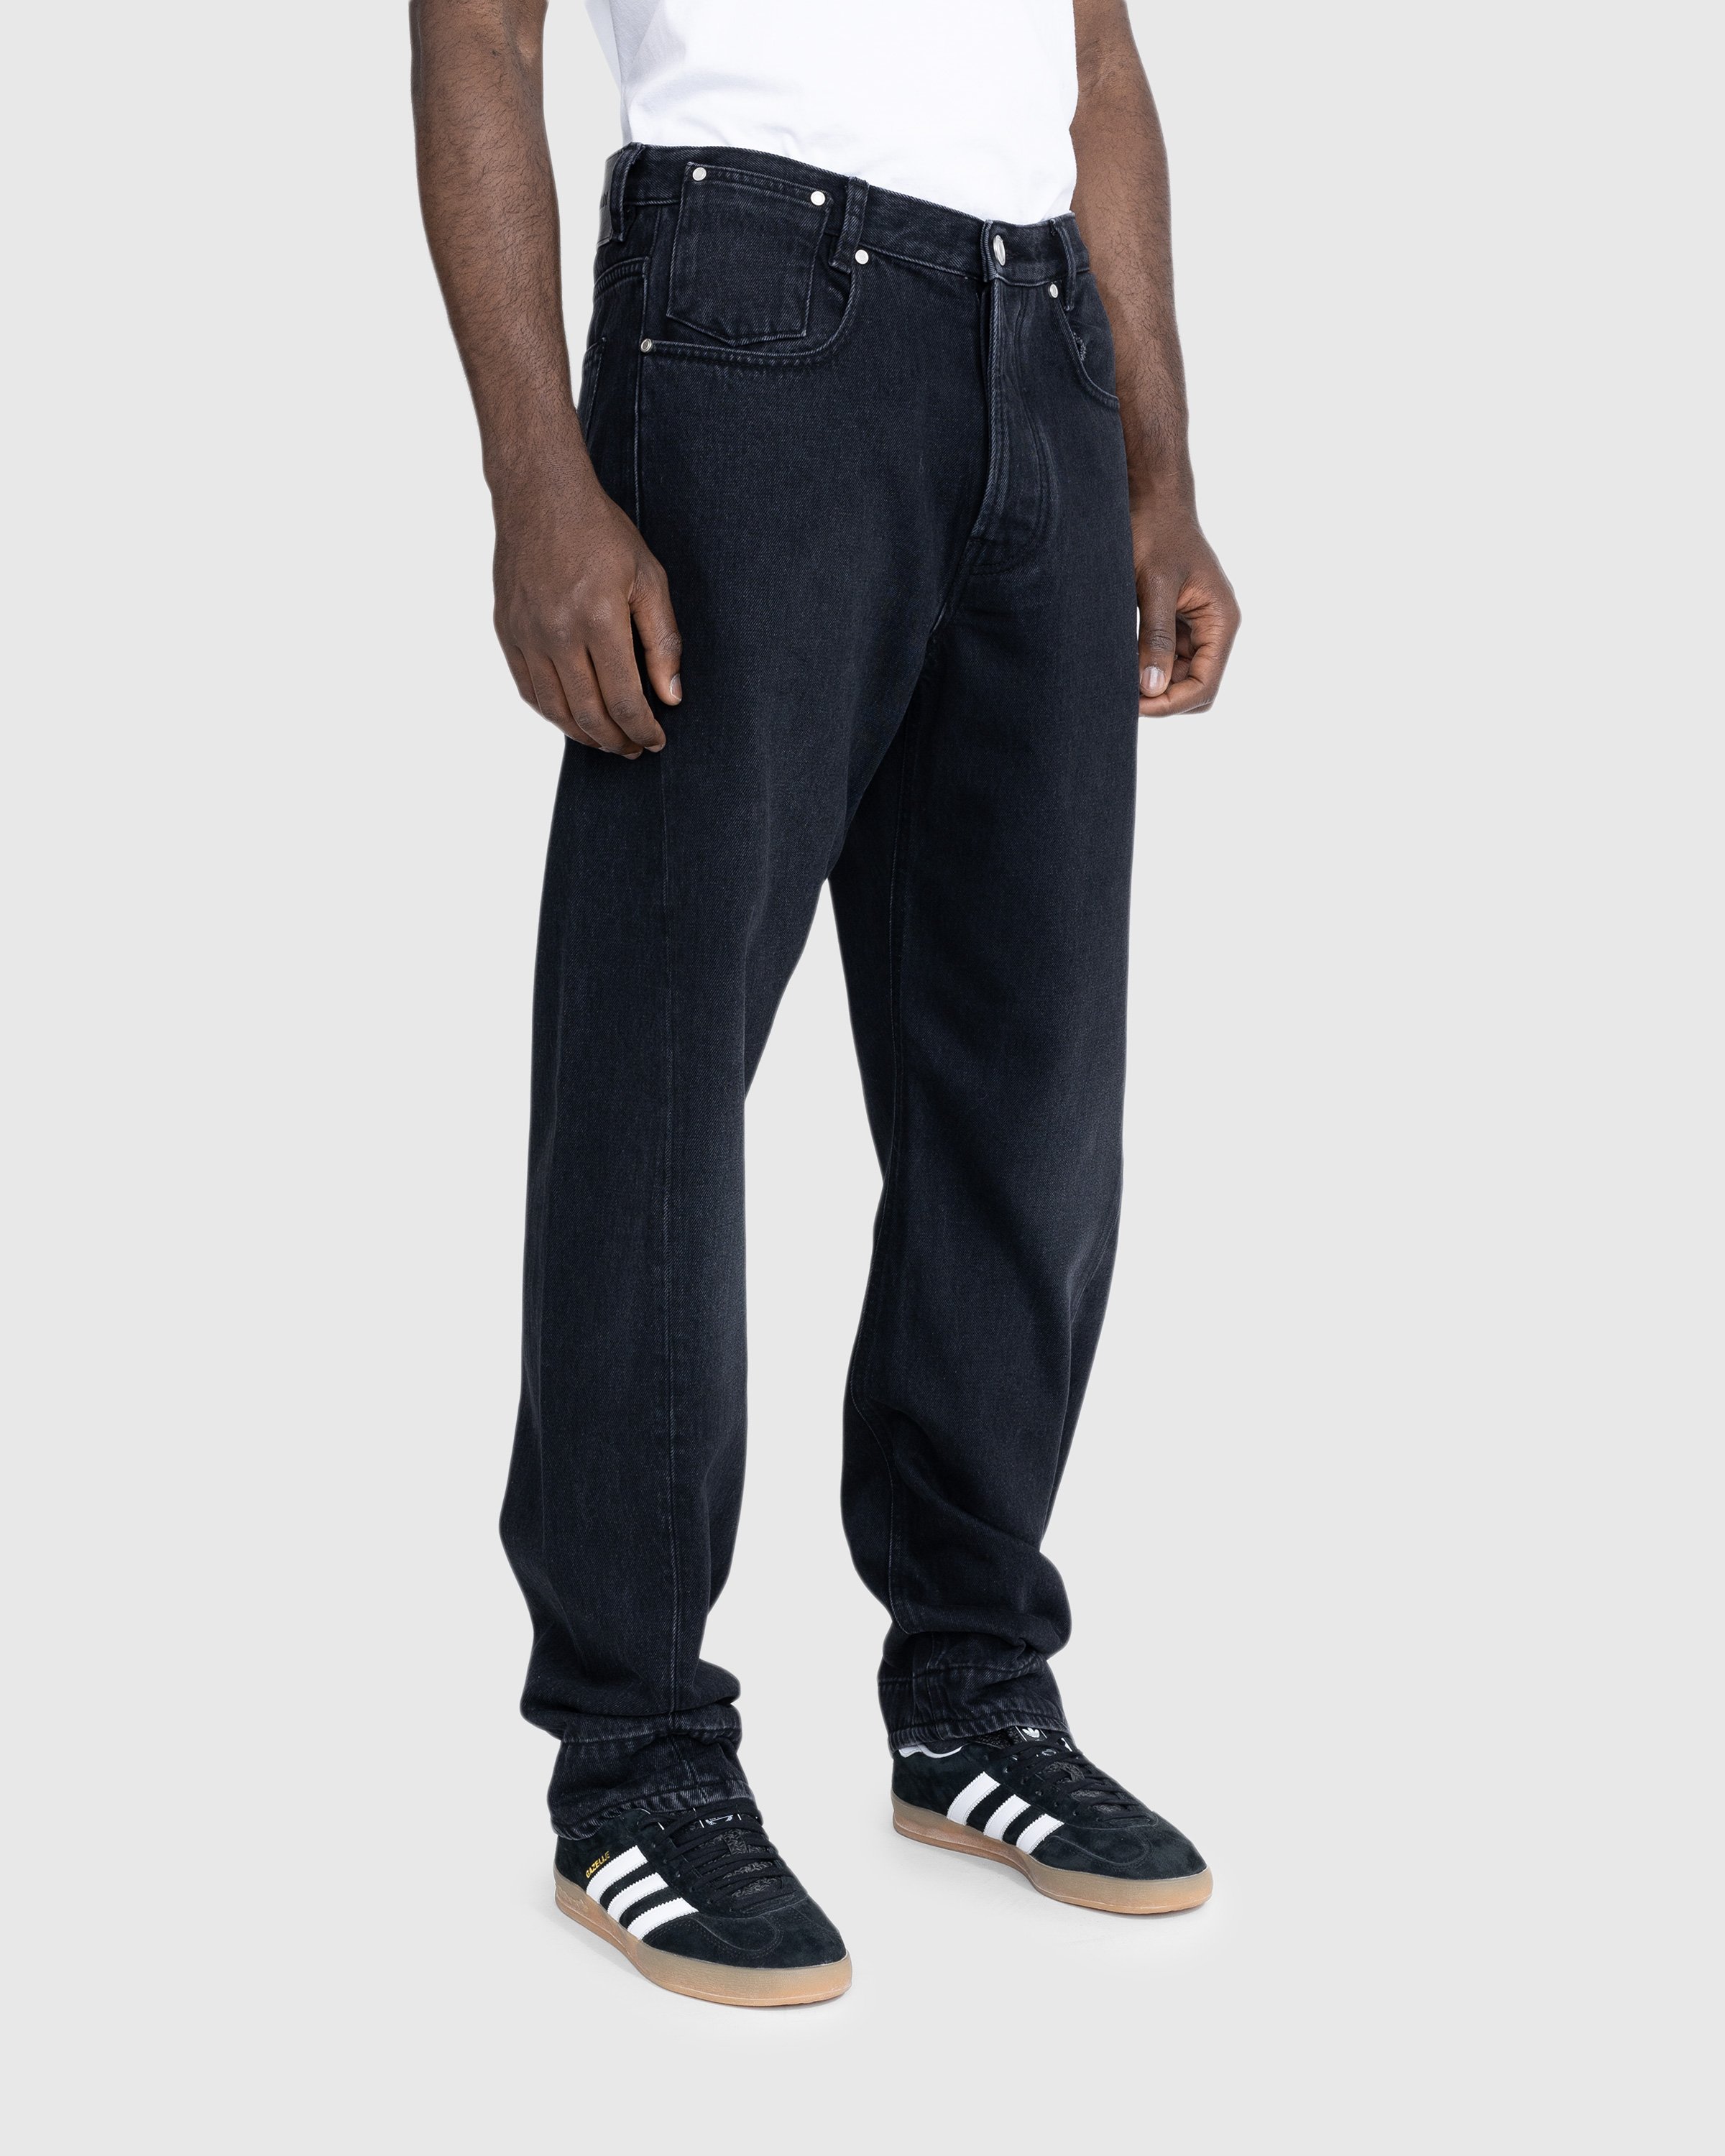 Trussardi - Five-Pocket Twisted Tapered Jeans Black Rigid - Clothing - Black - Image 4